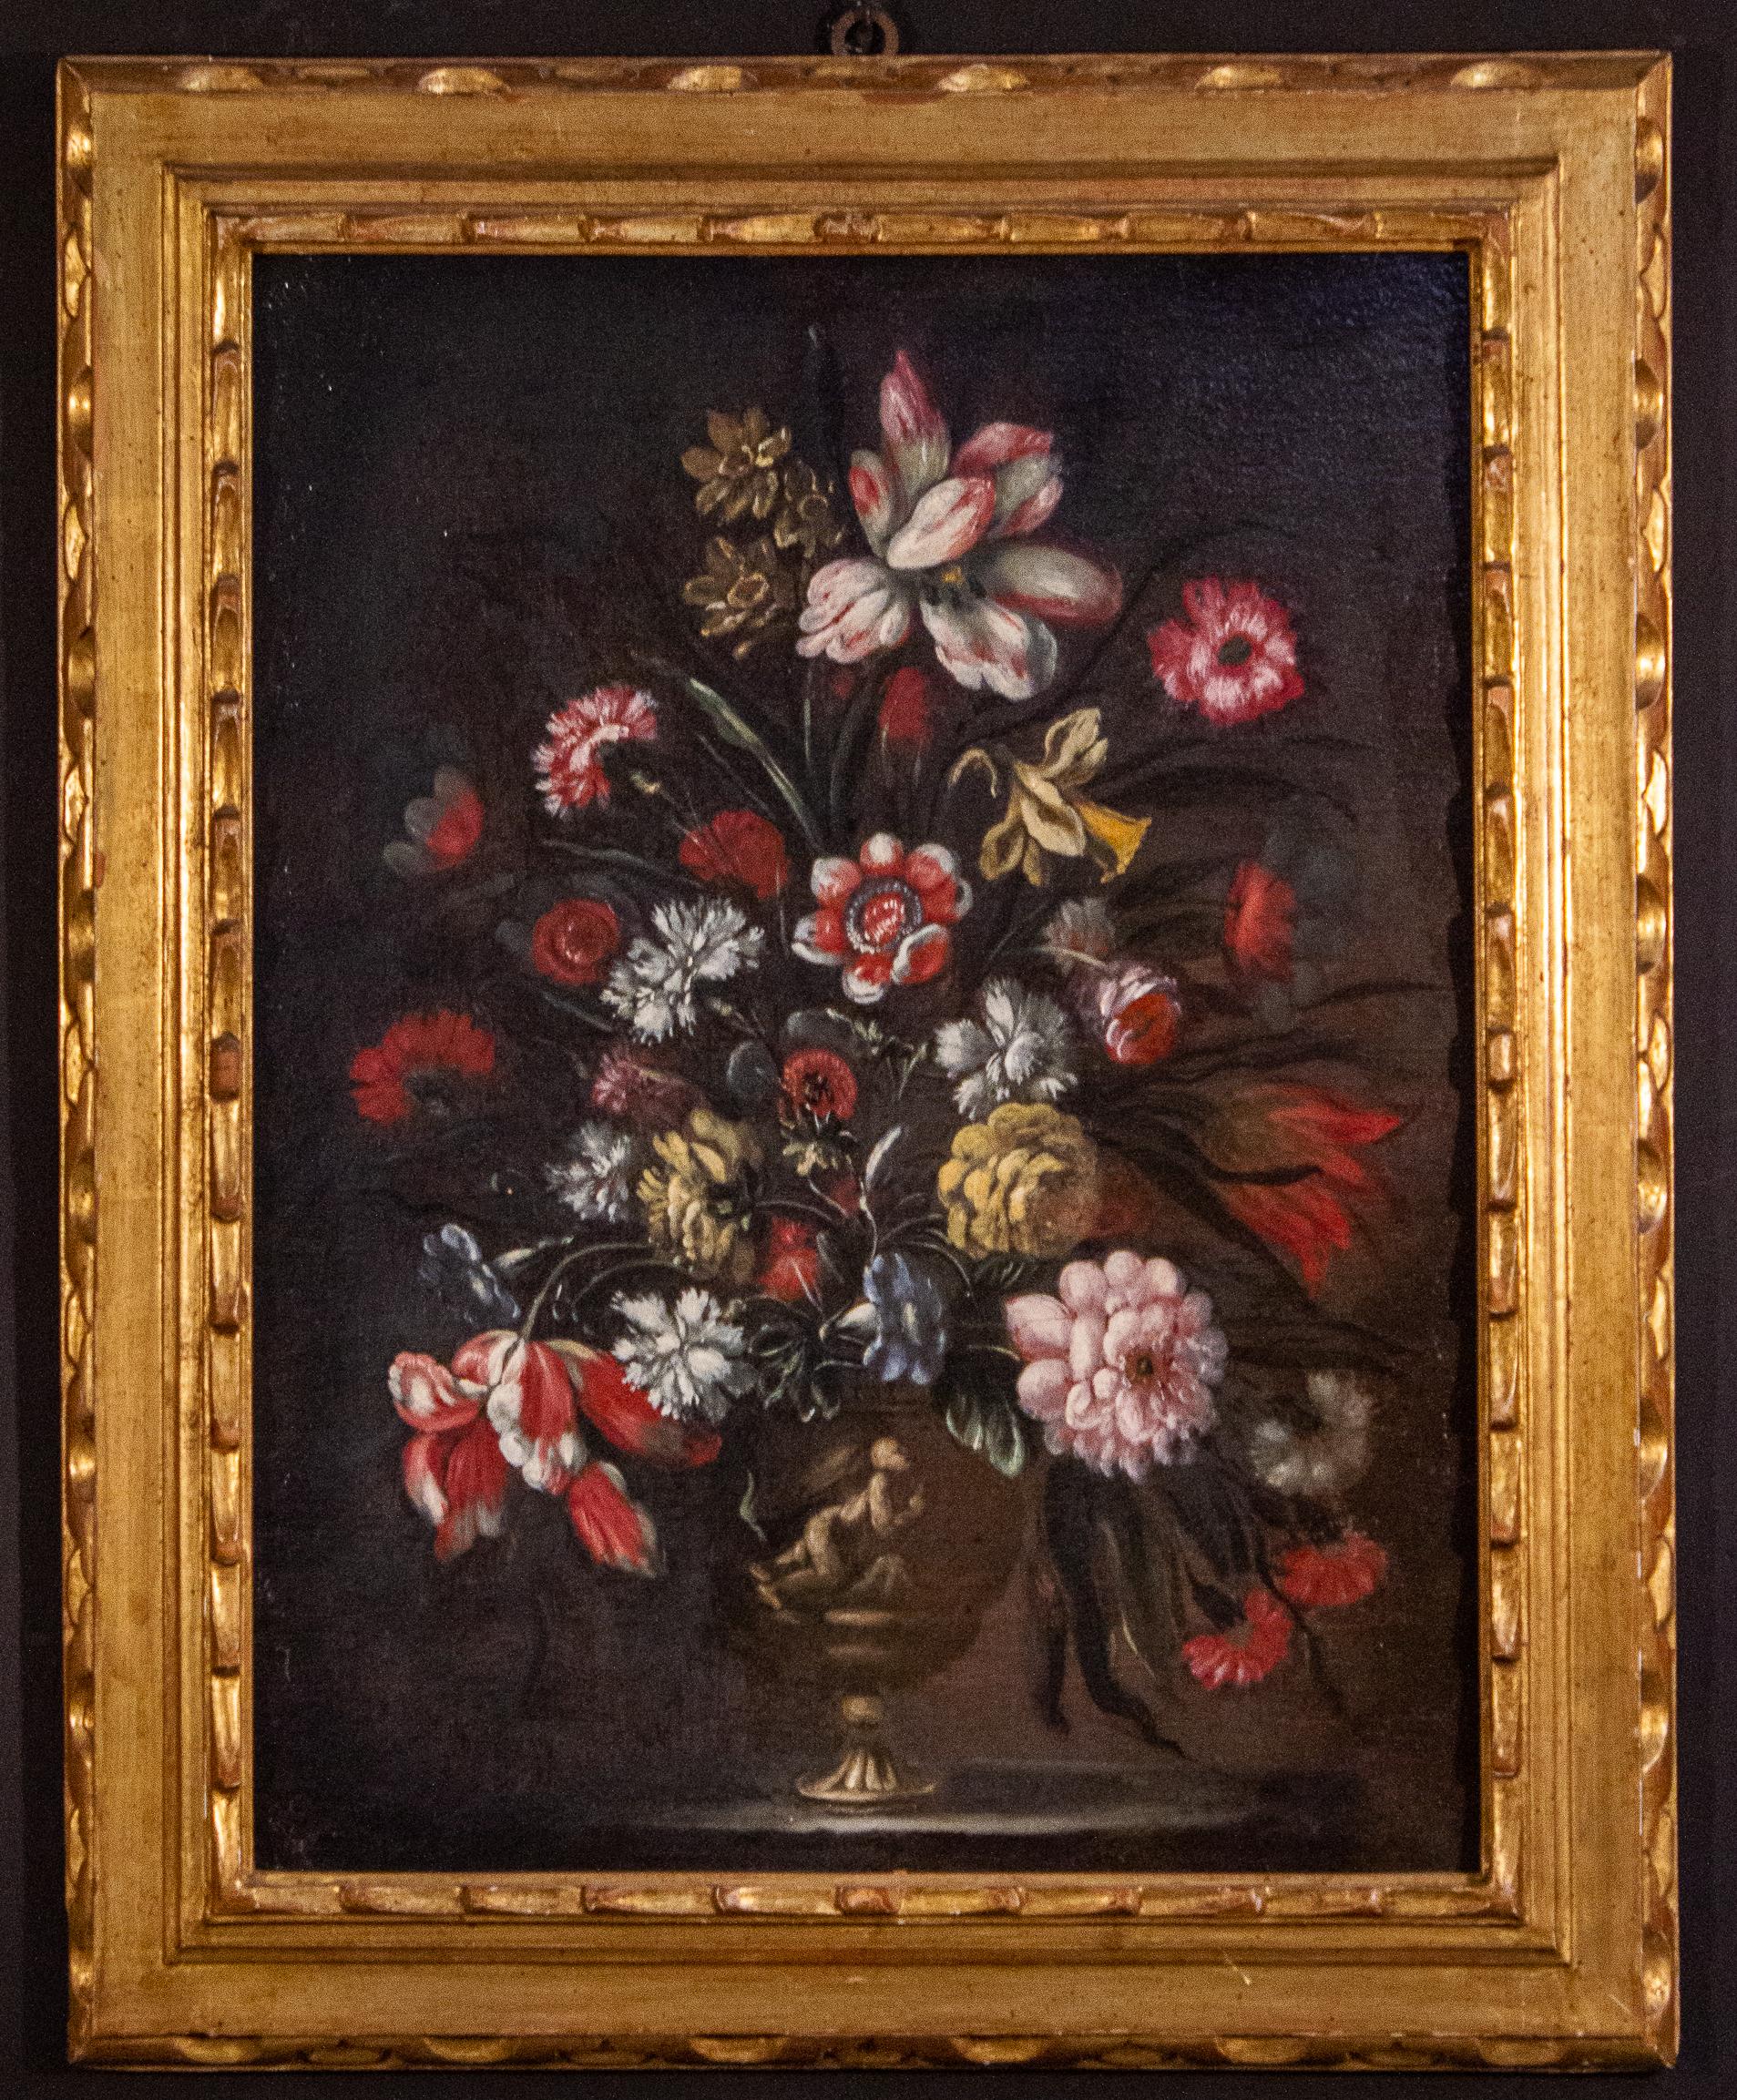 18th century flower paintings